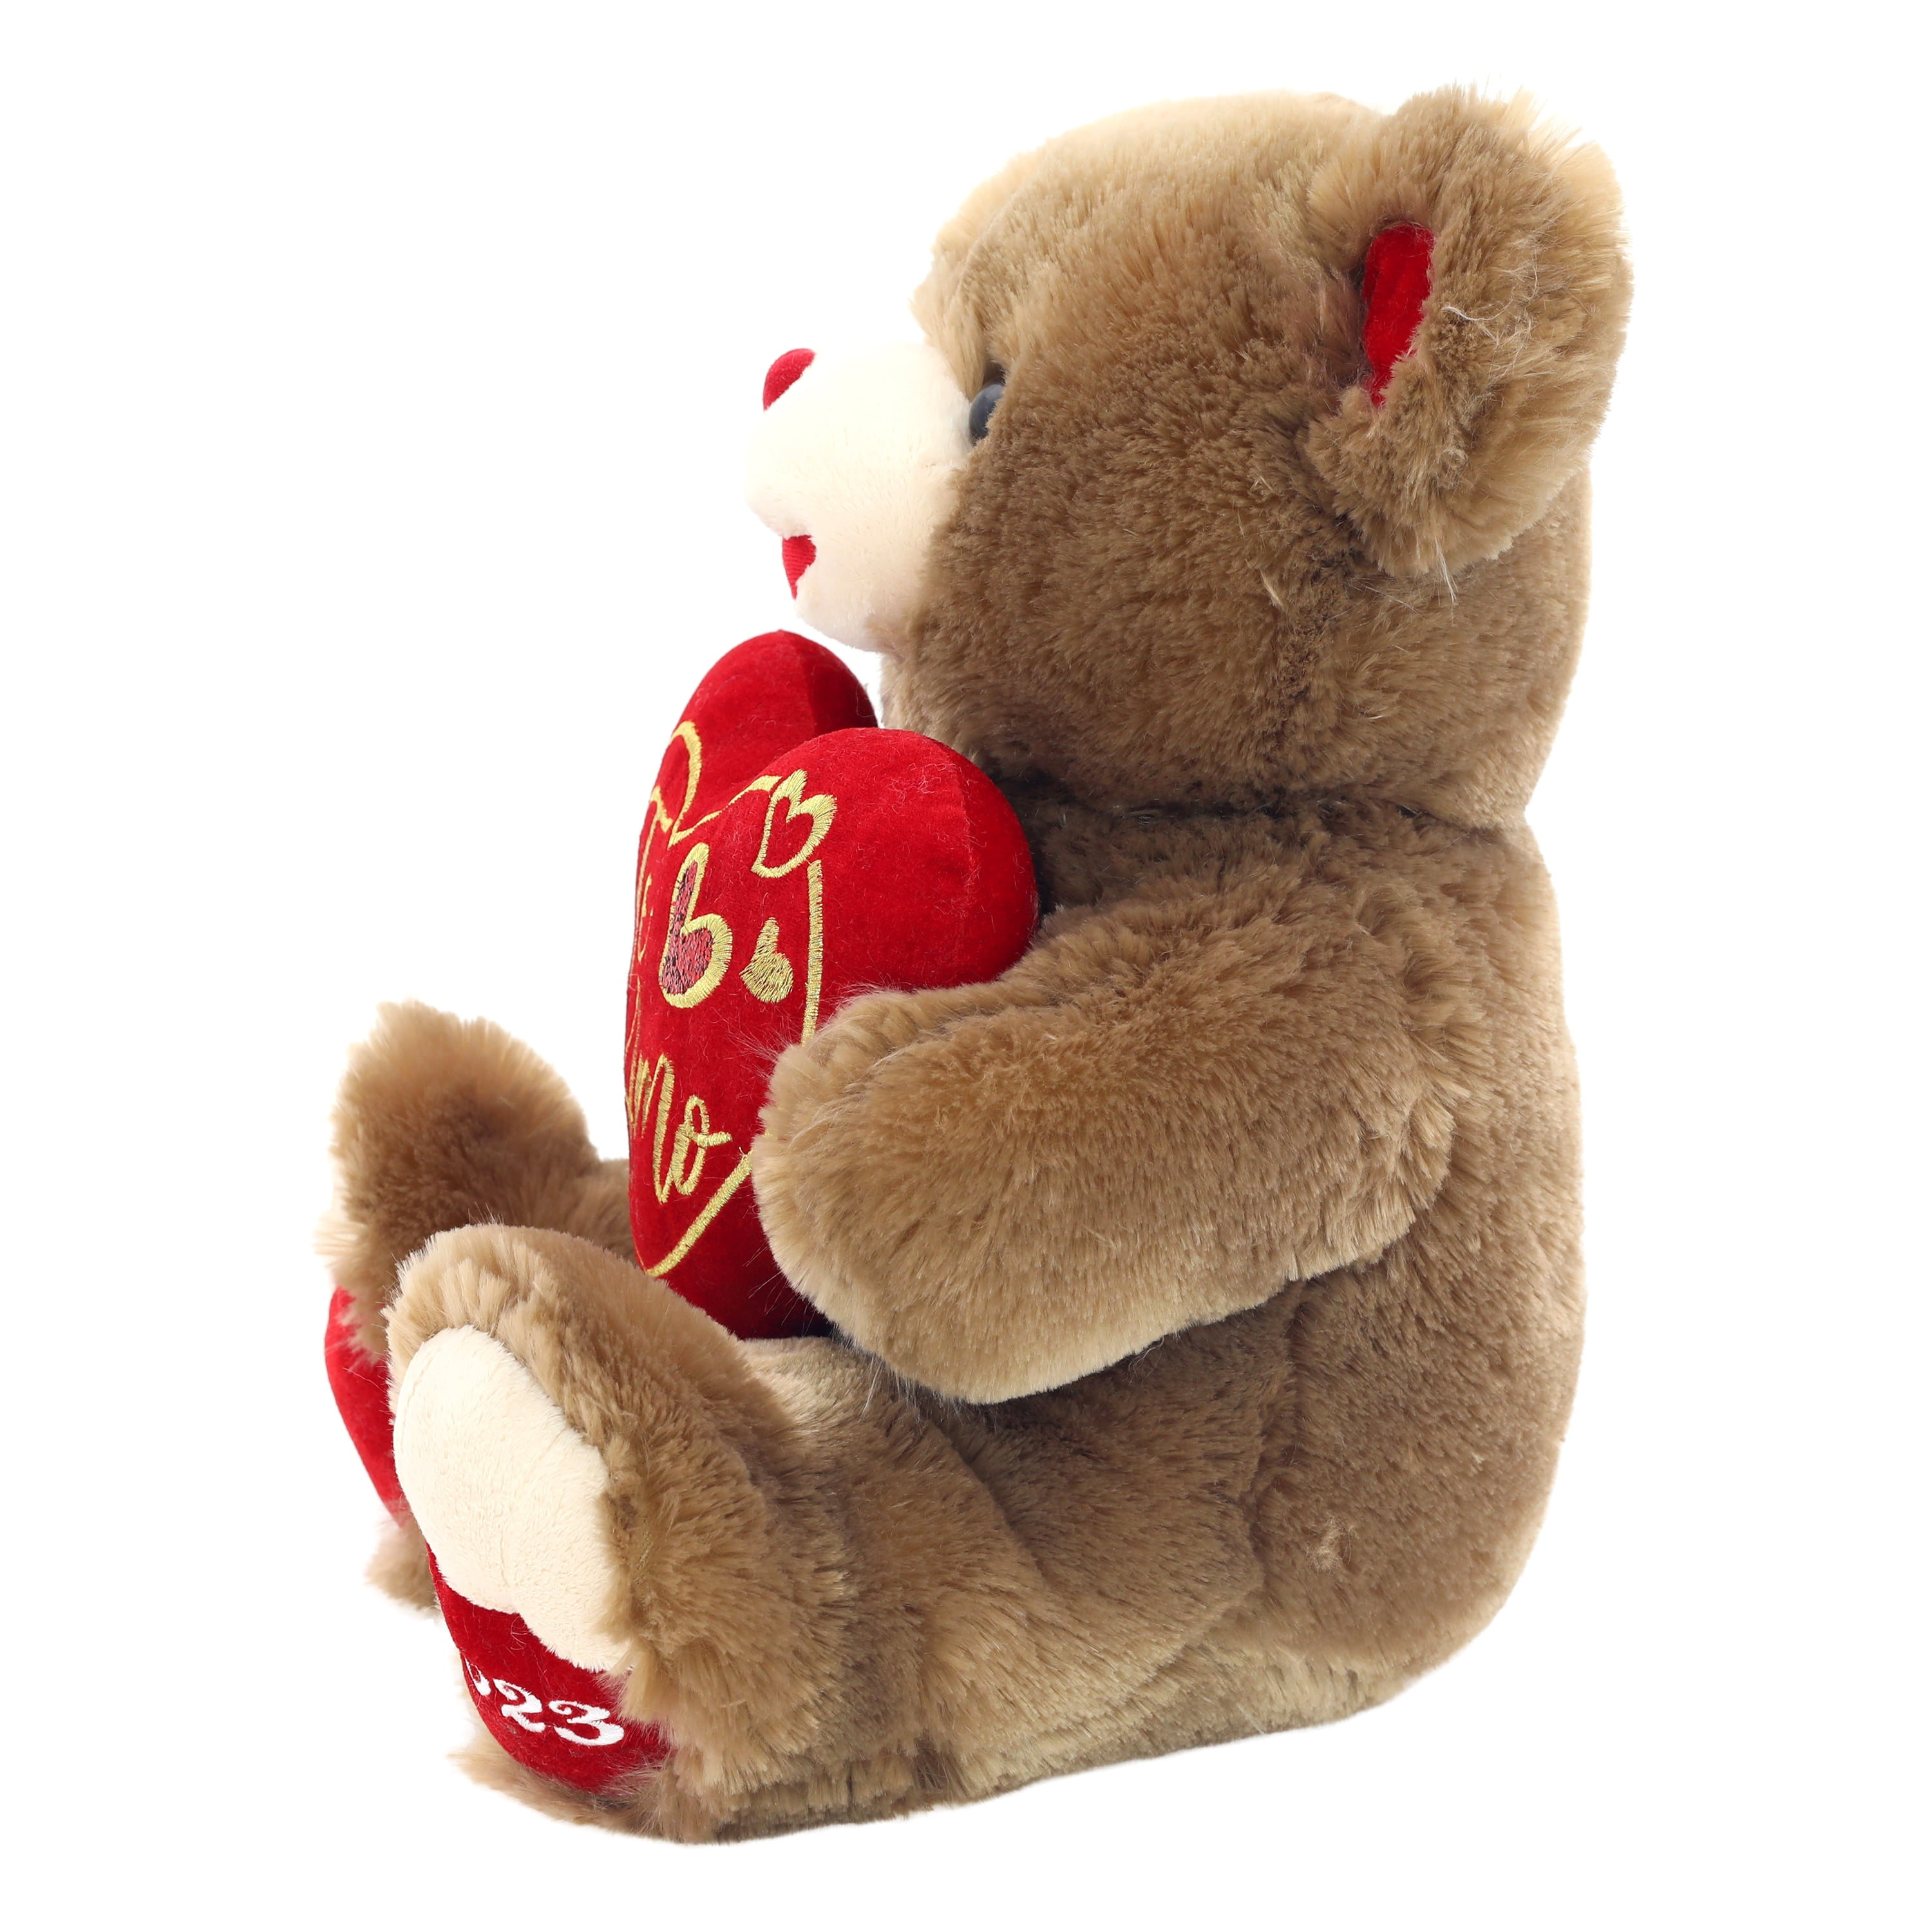 Way to Celebrate! Valentine's Day 15in Sweetheart Teddy Bear 2023, Black 